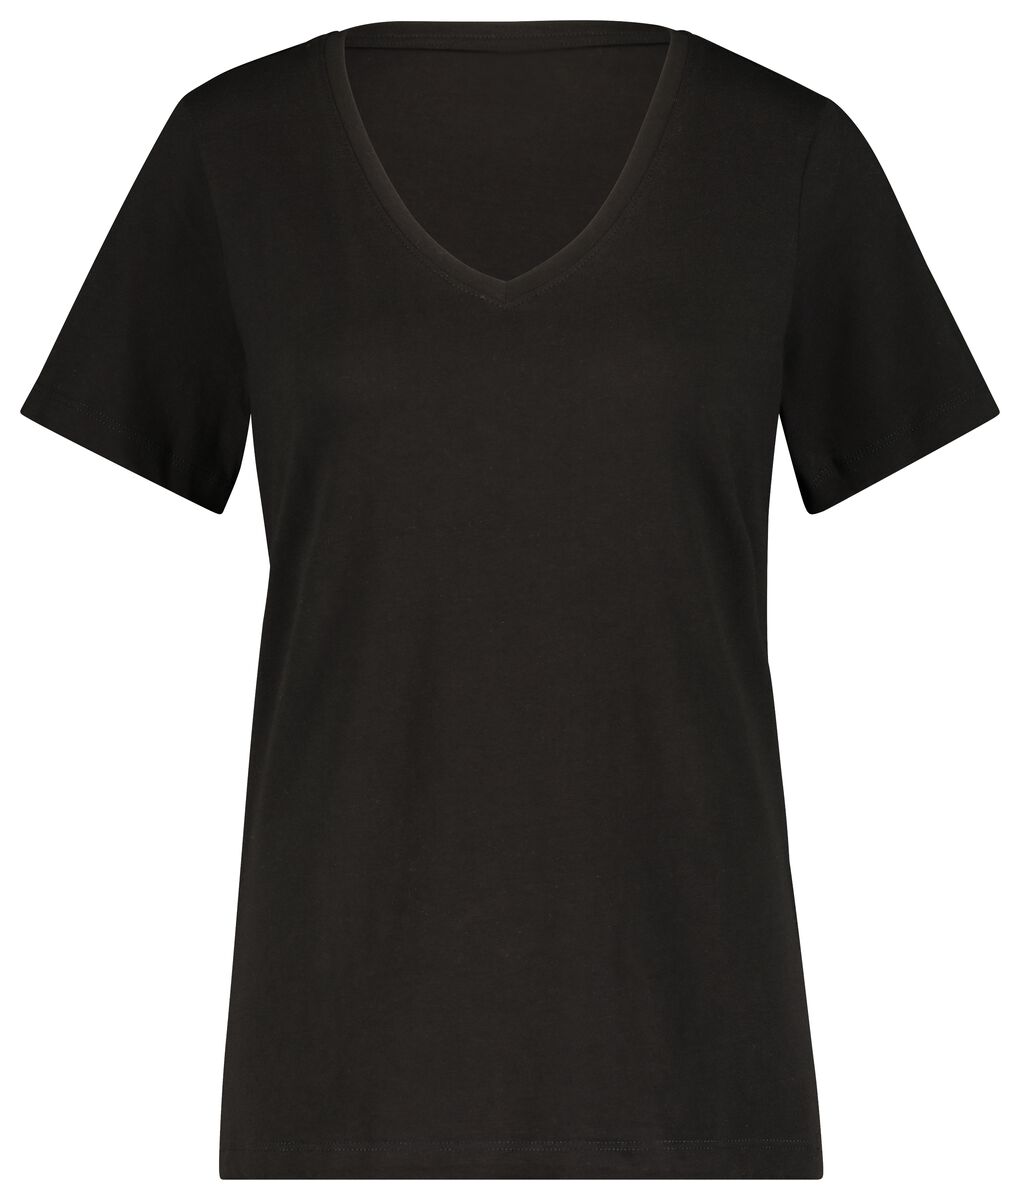 dames t-shirt met bamboe zwart zwart - 1000027537 - HEMA